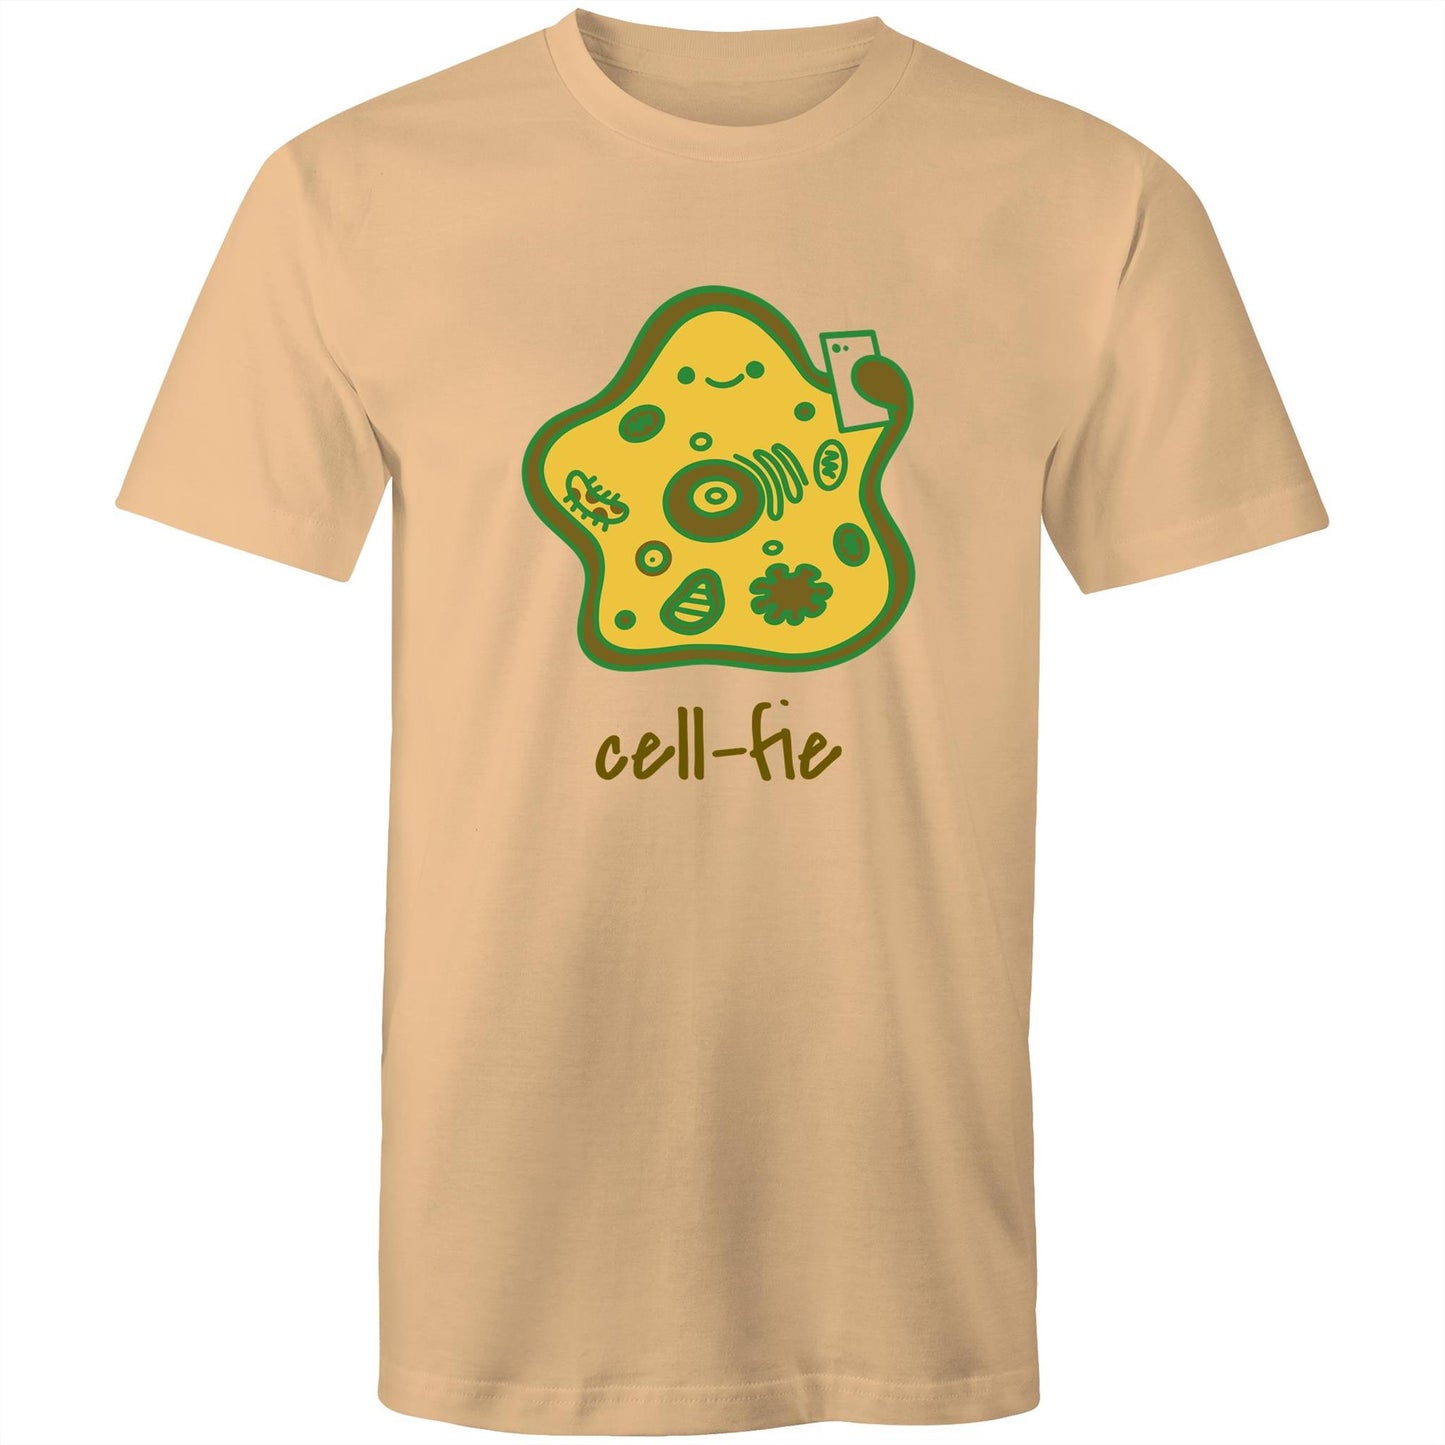 Cell-fie - Mens T-Shirt Tan Mens T-shirt Science